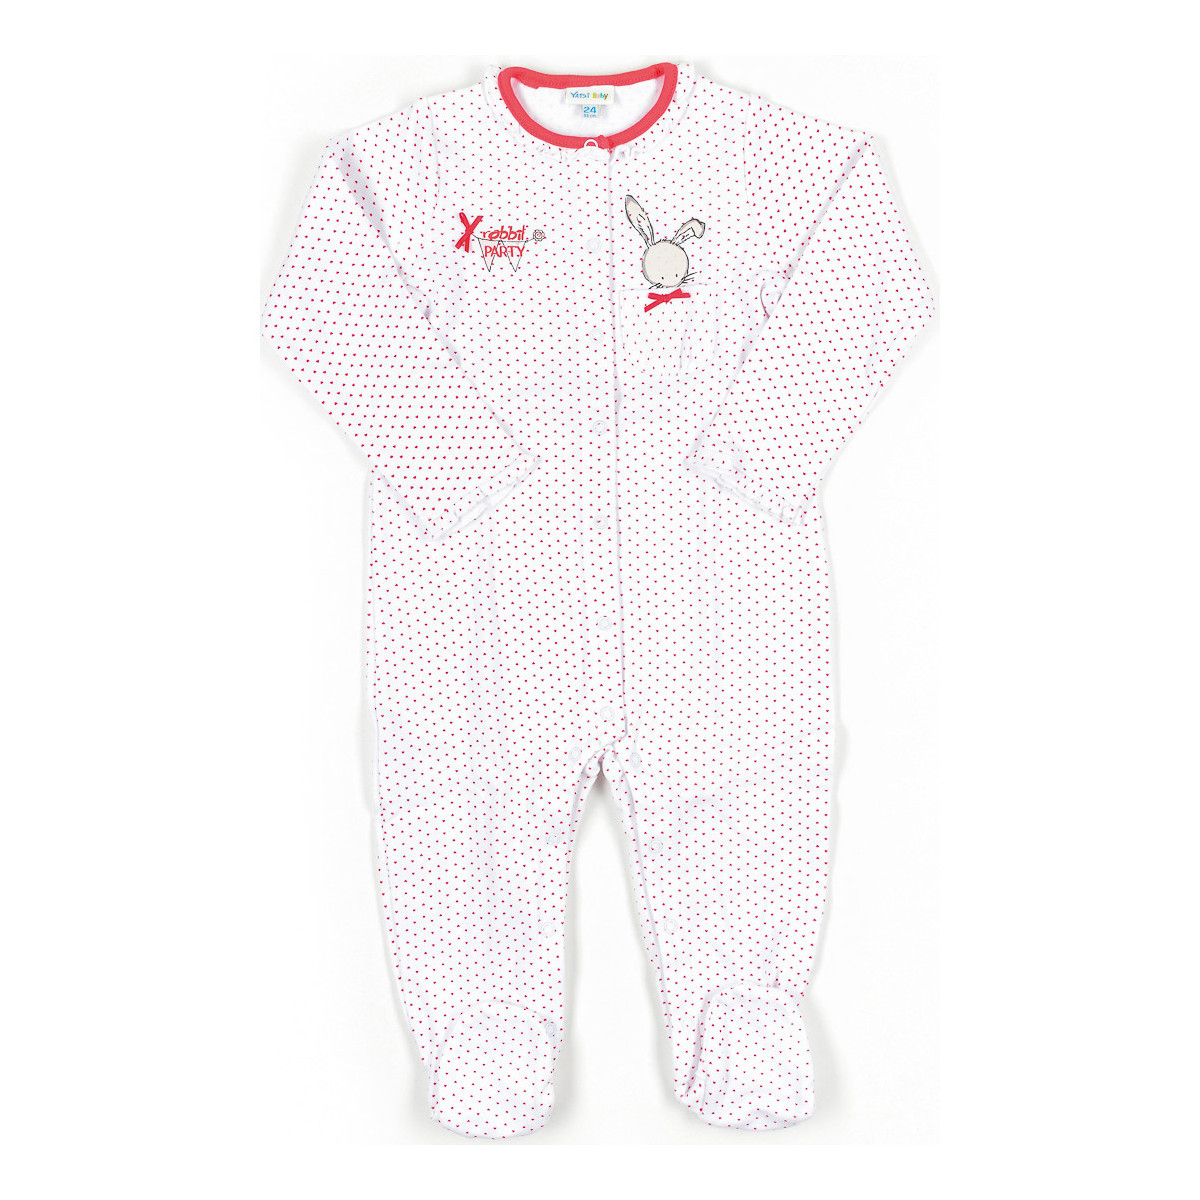 Kleidung Kinder Pyjamas/ Nachthemden Yatsi 8084-BLANCO Multicolor